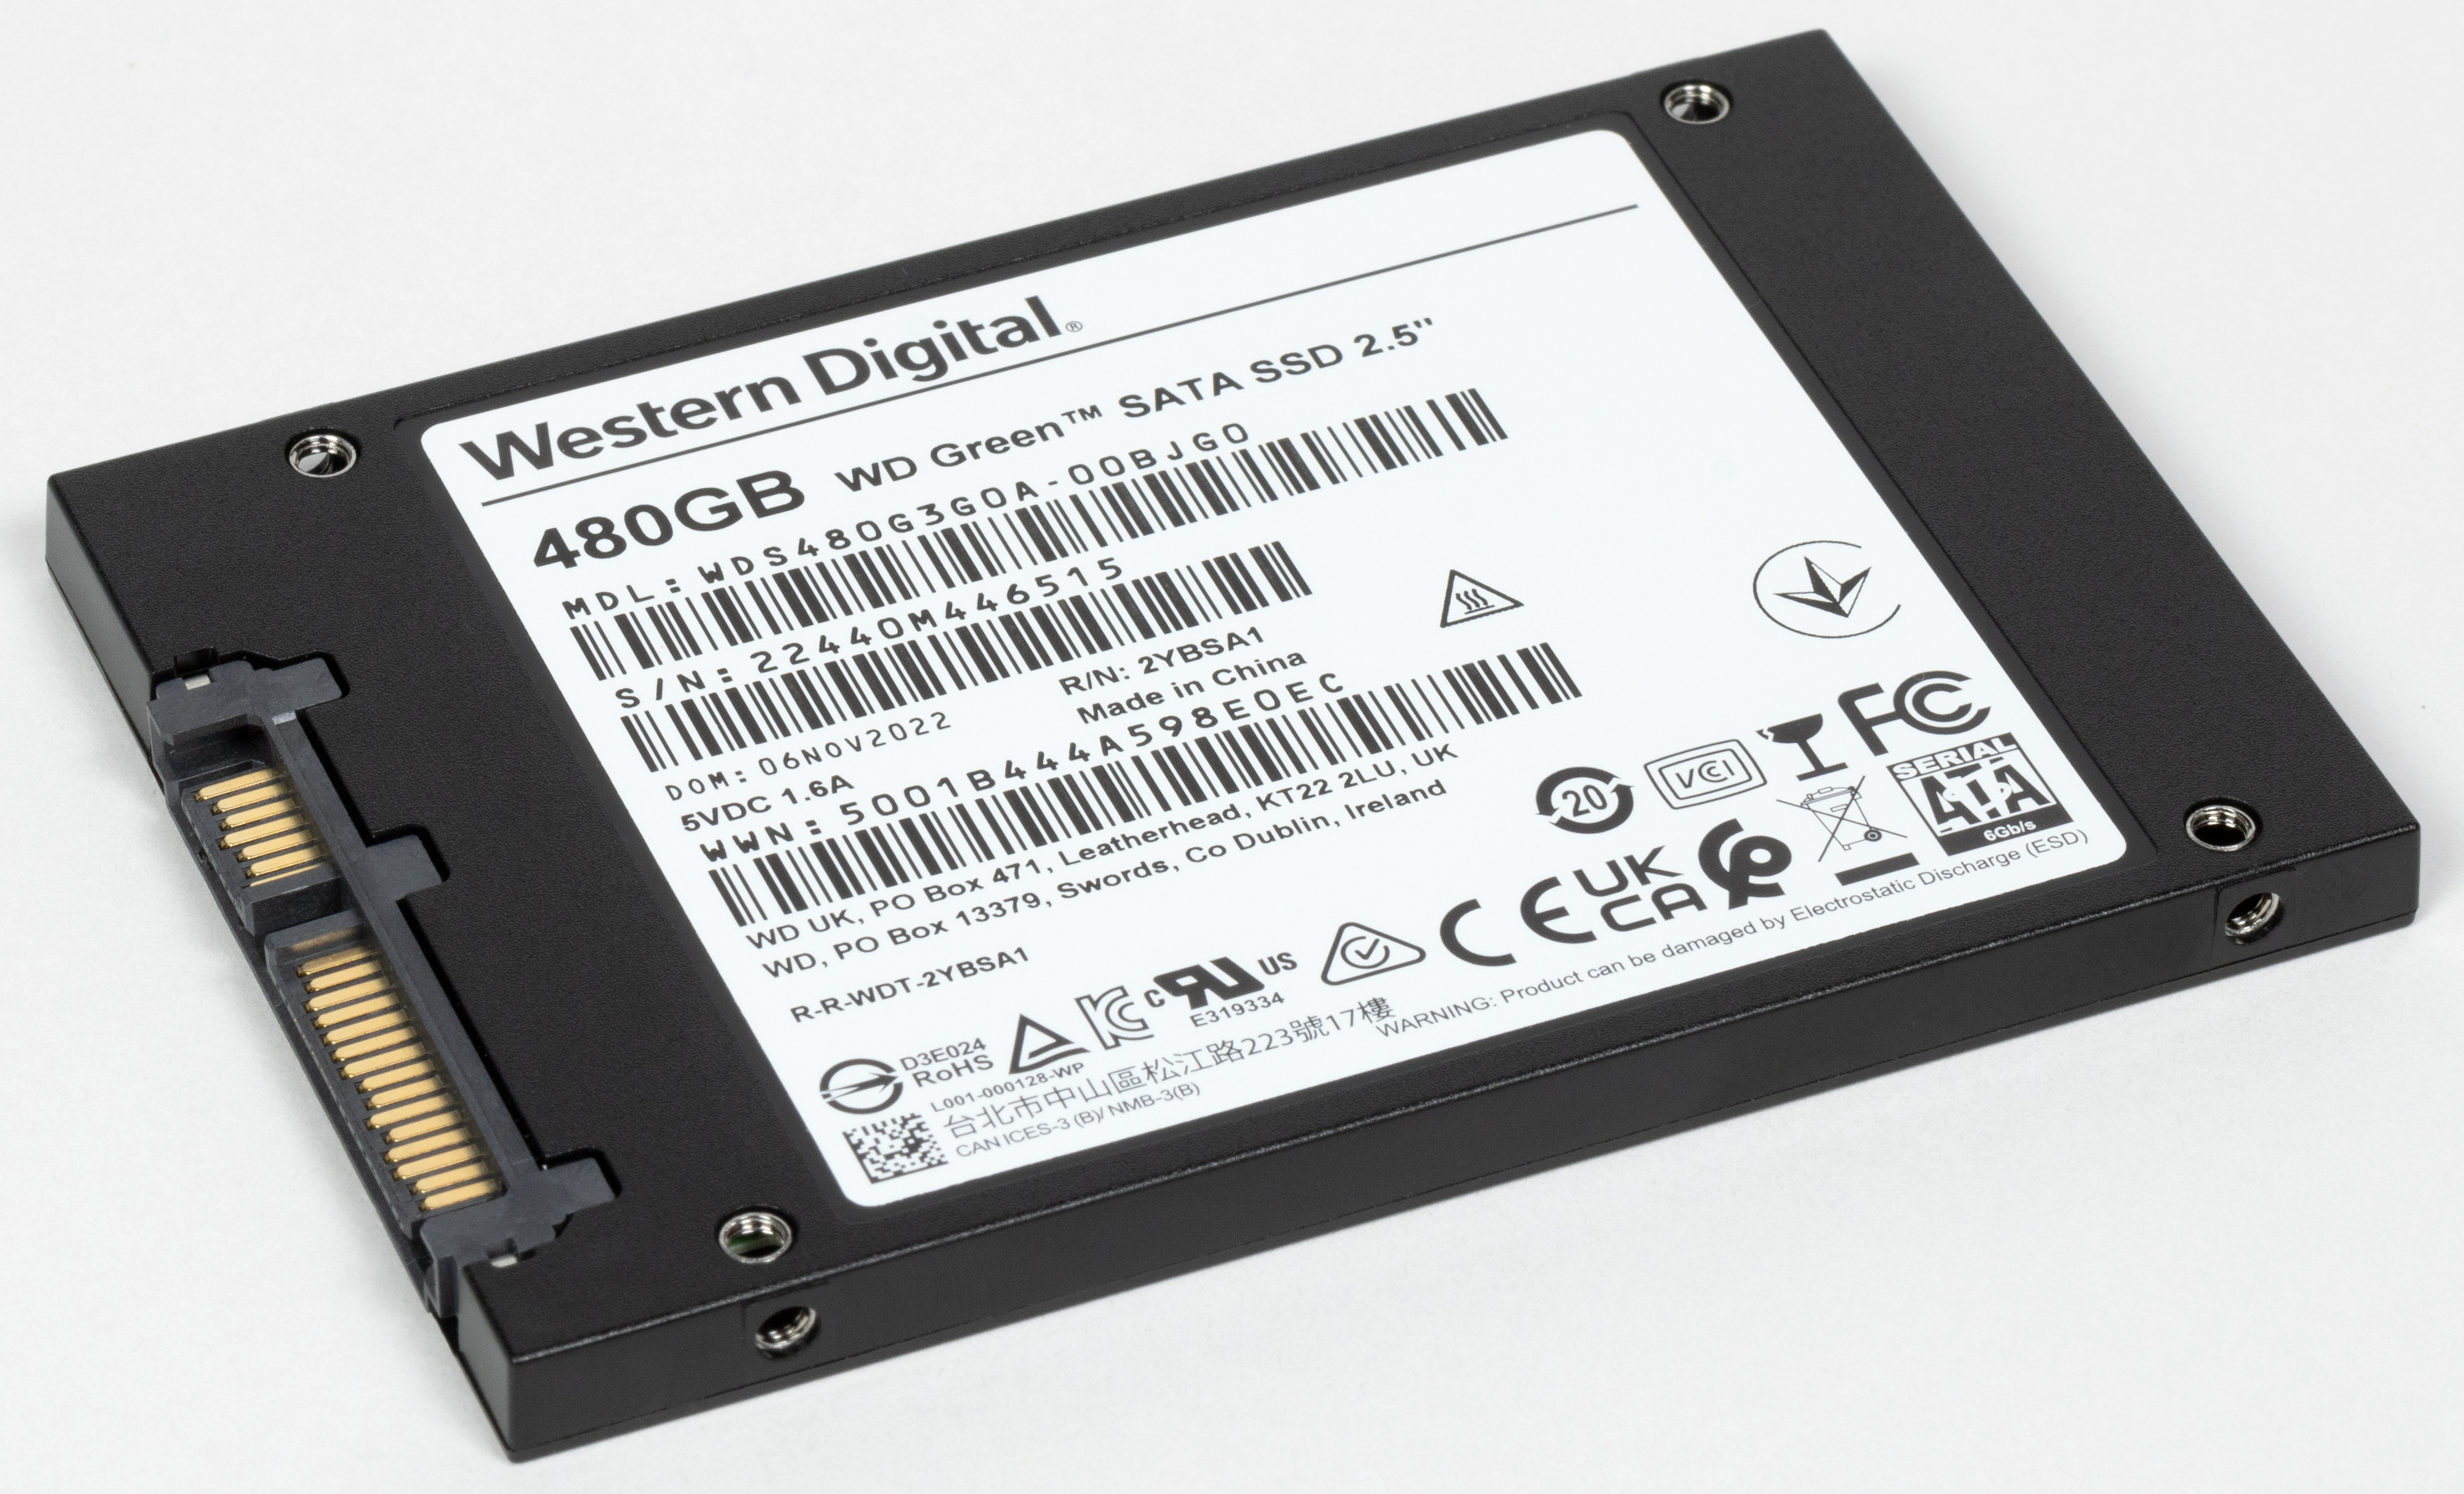 Ssd wd green 480gb. Бюджетные ссд. SSD WD Green плата. WD Blue sa510 2.5. 480 GB SSD WD Green характеристики театы.